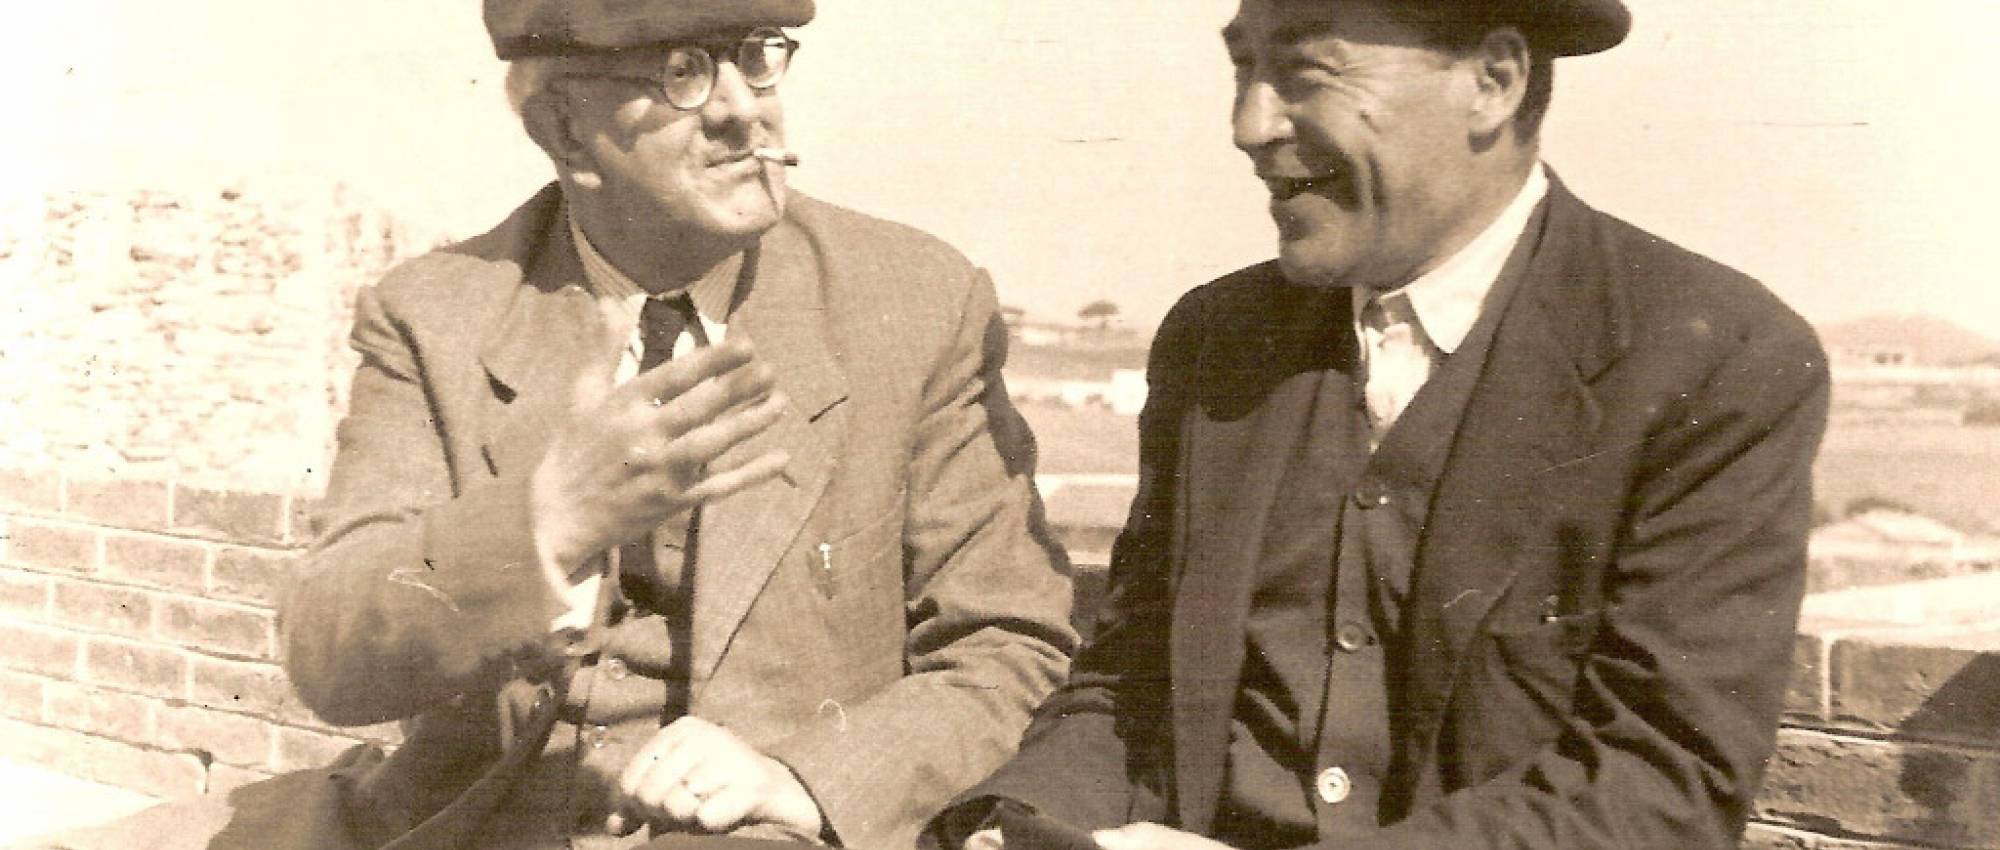 Josep Pla (right) with Manuel Brunet. Public domain